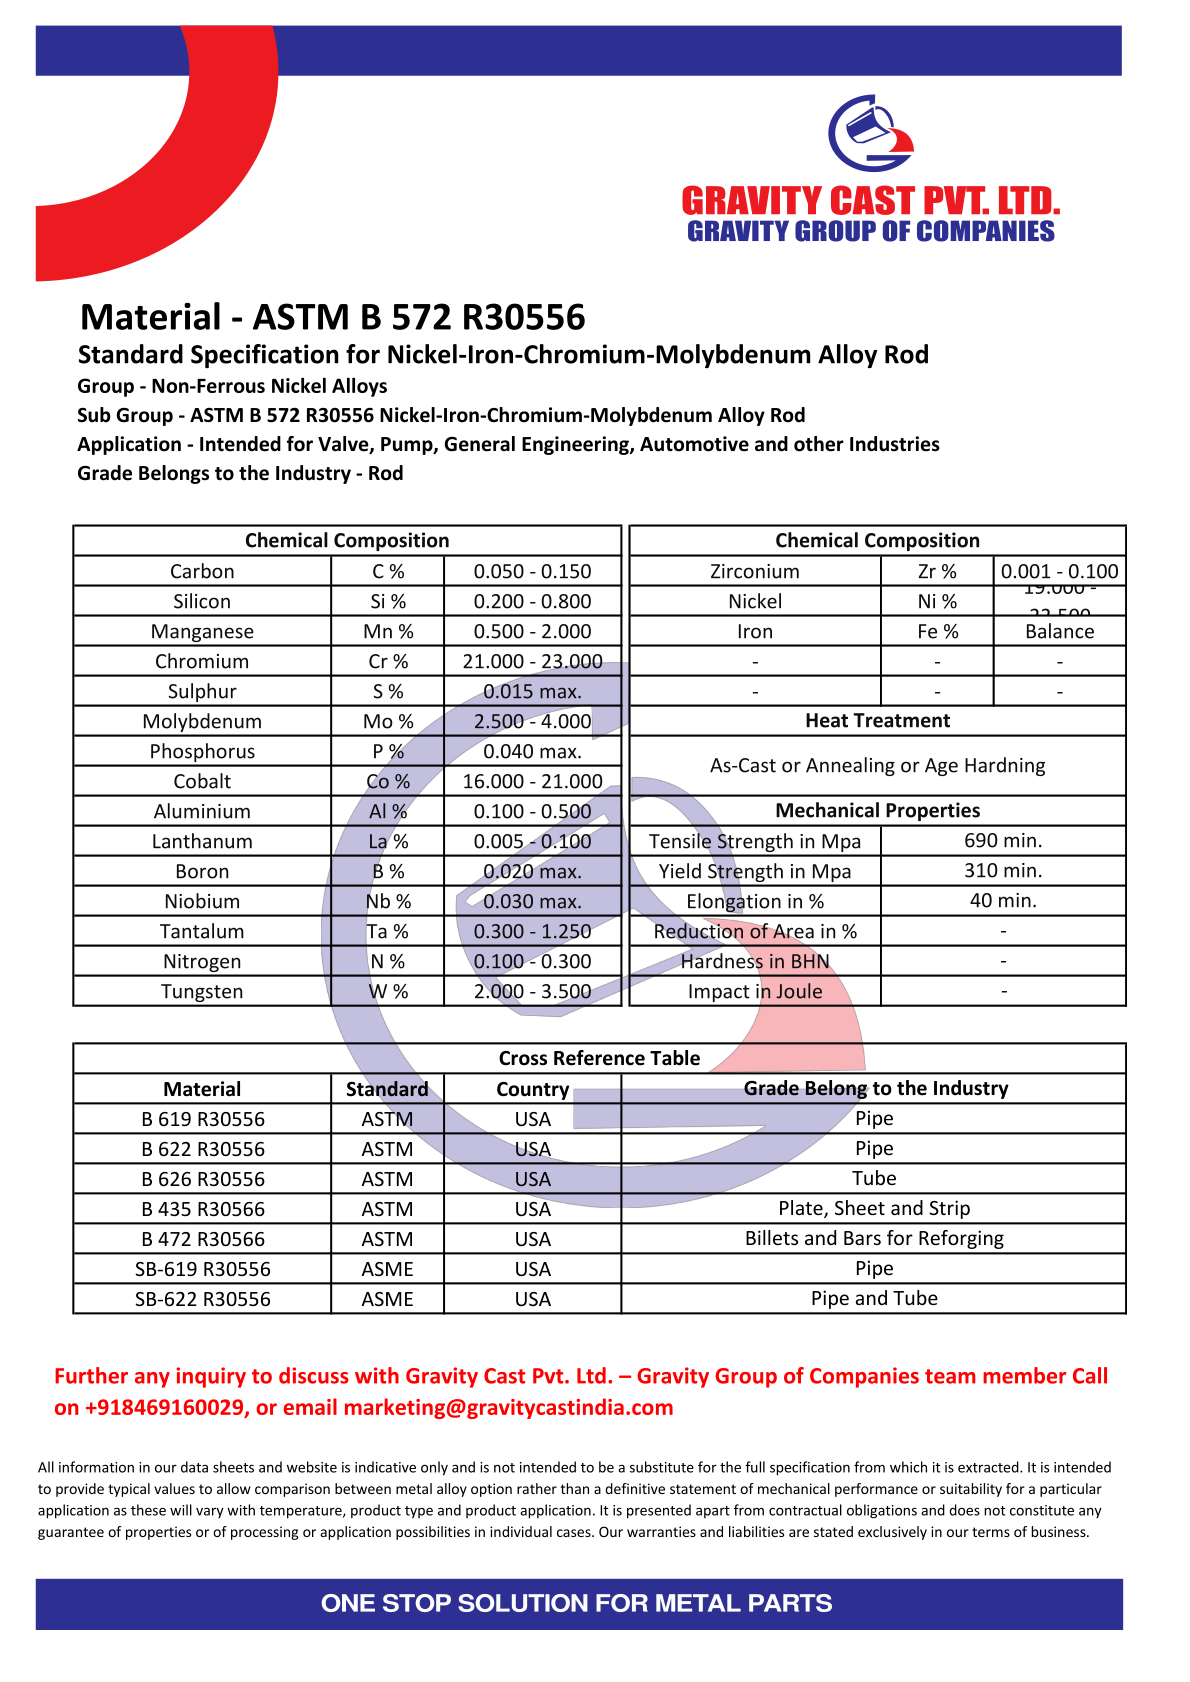 ASTM B 572 R30556.pdf